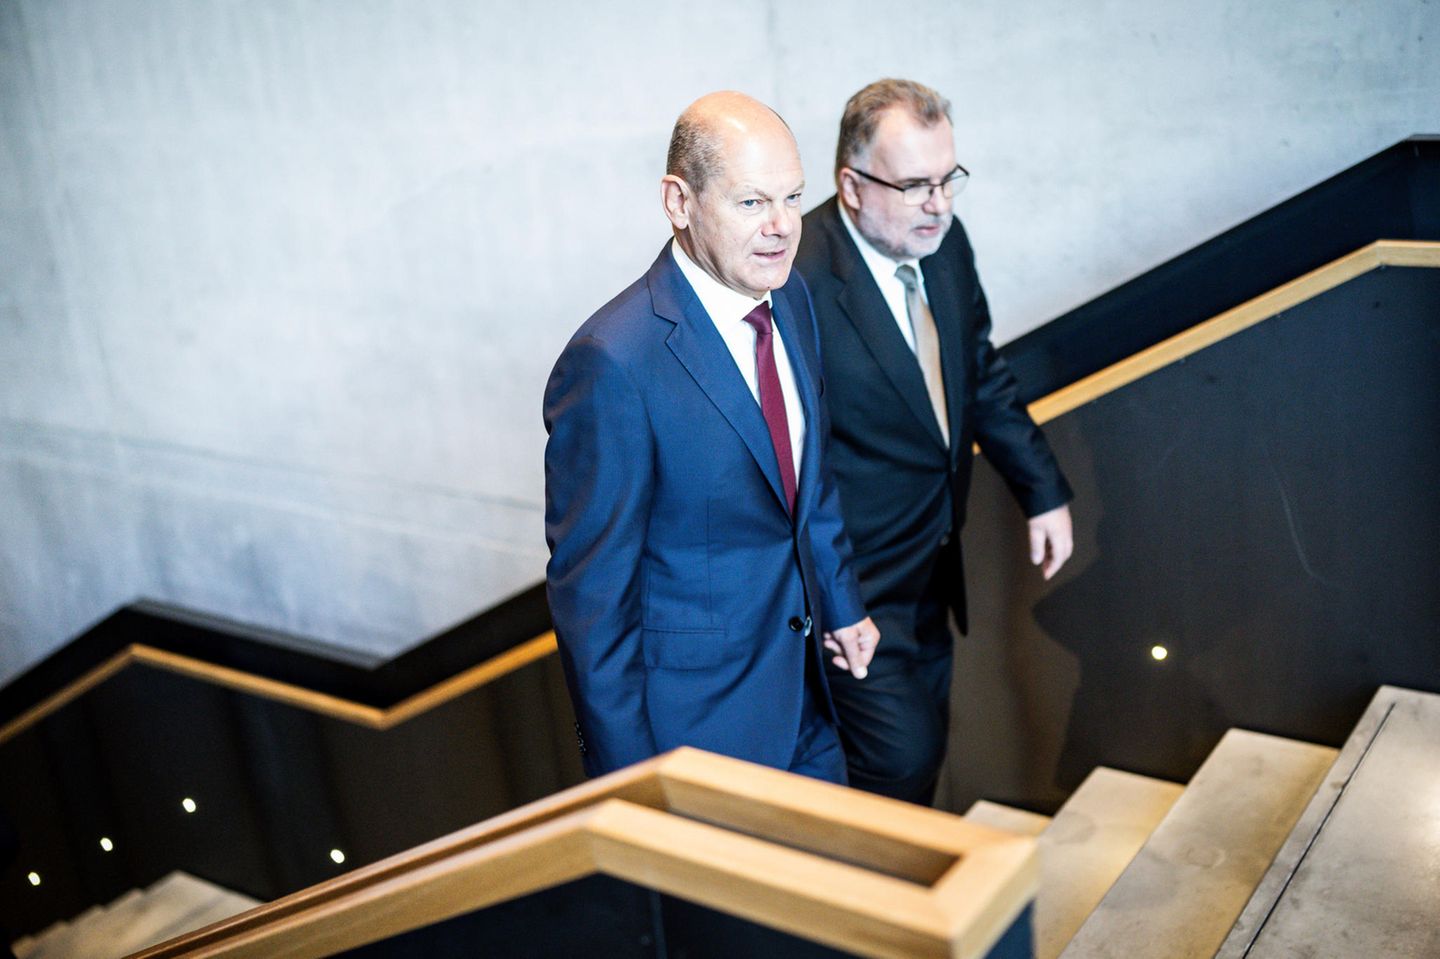 Bundeskanzler Olaf Scholz (SPD) ontmoette Siegfried Russwurm, BDI-voorzitter